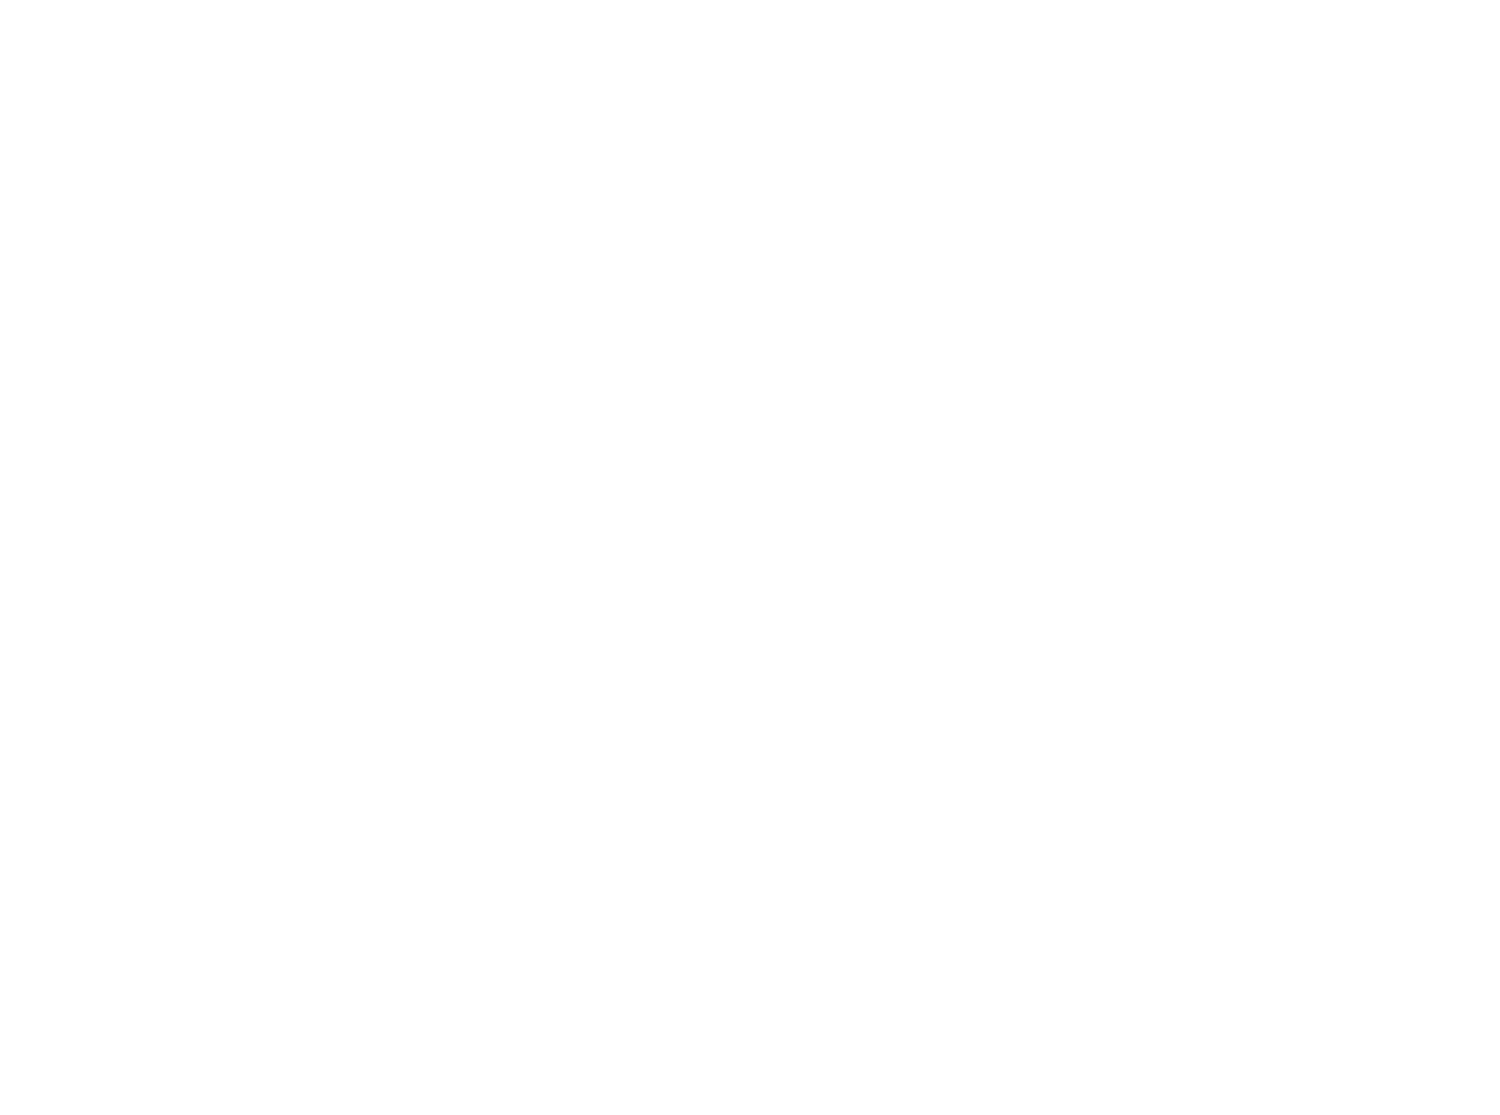 HealthBay